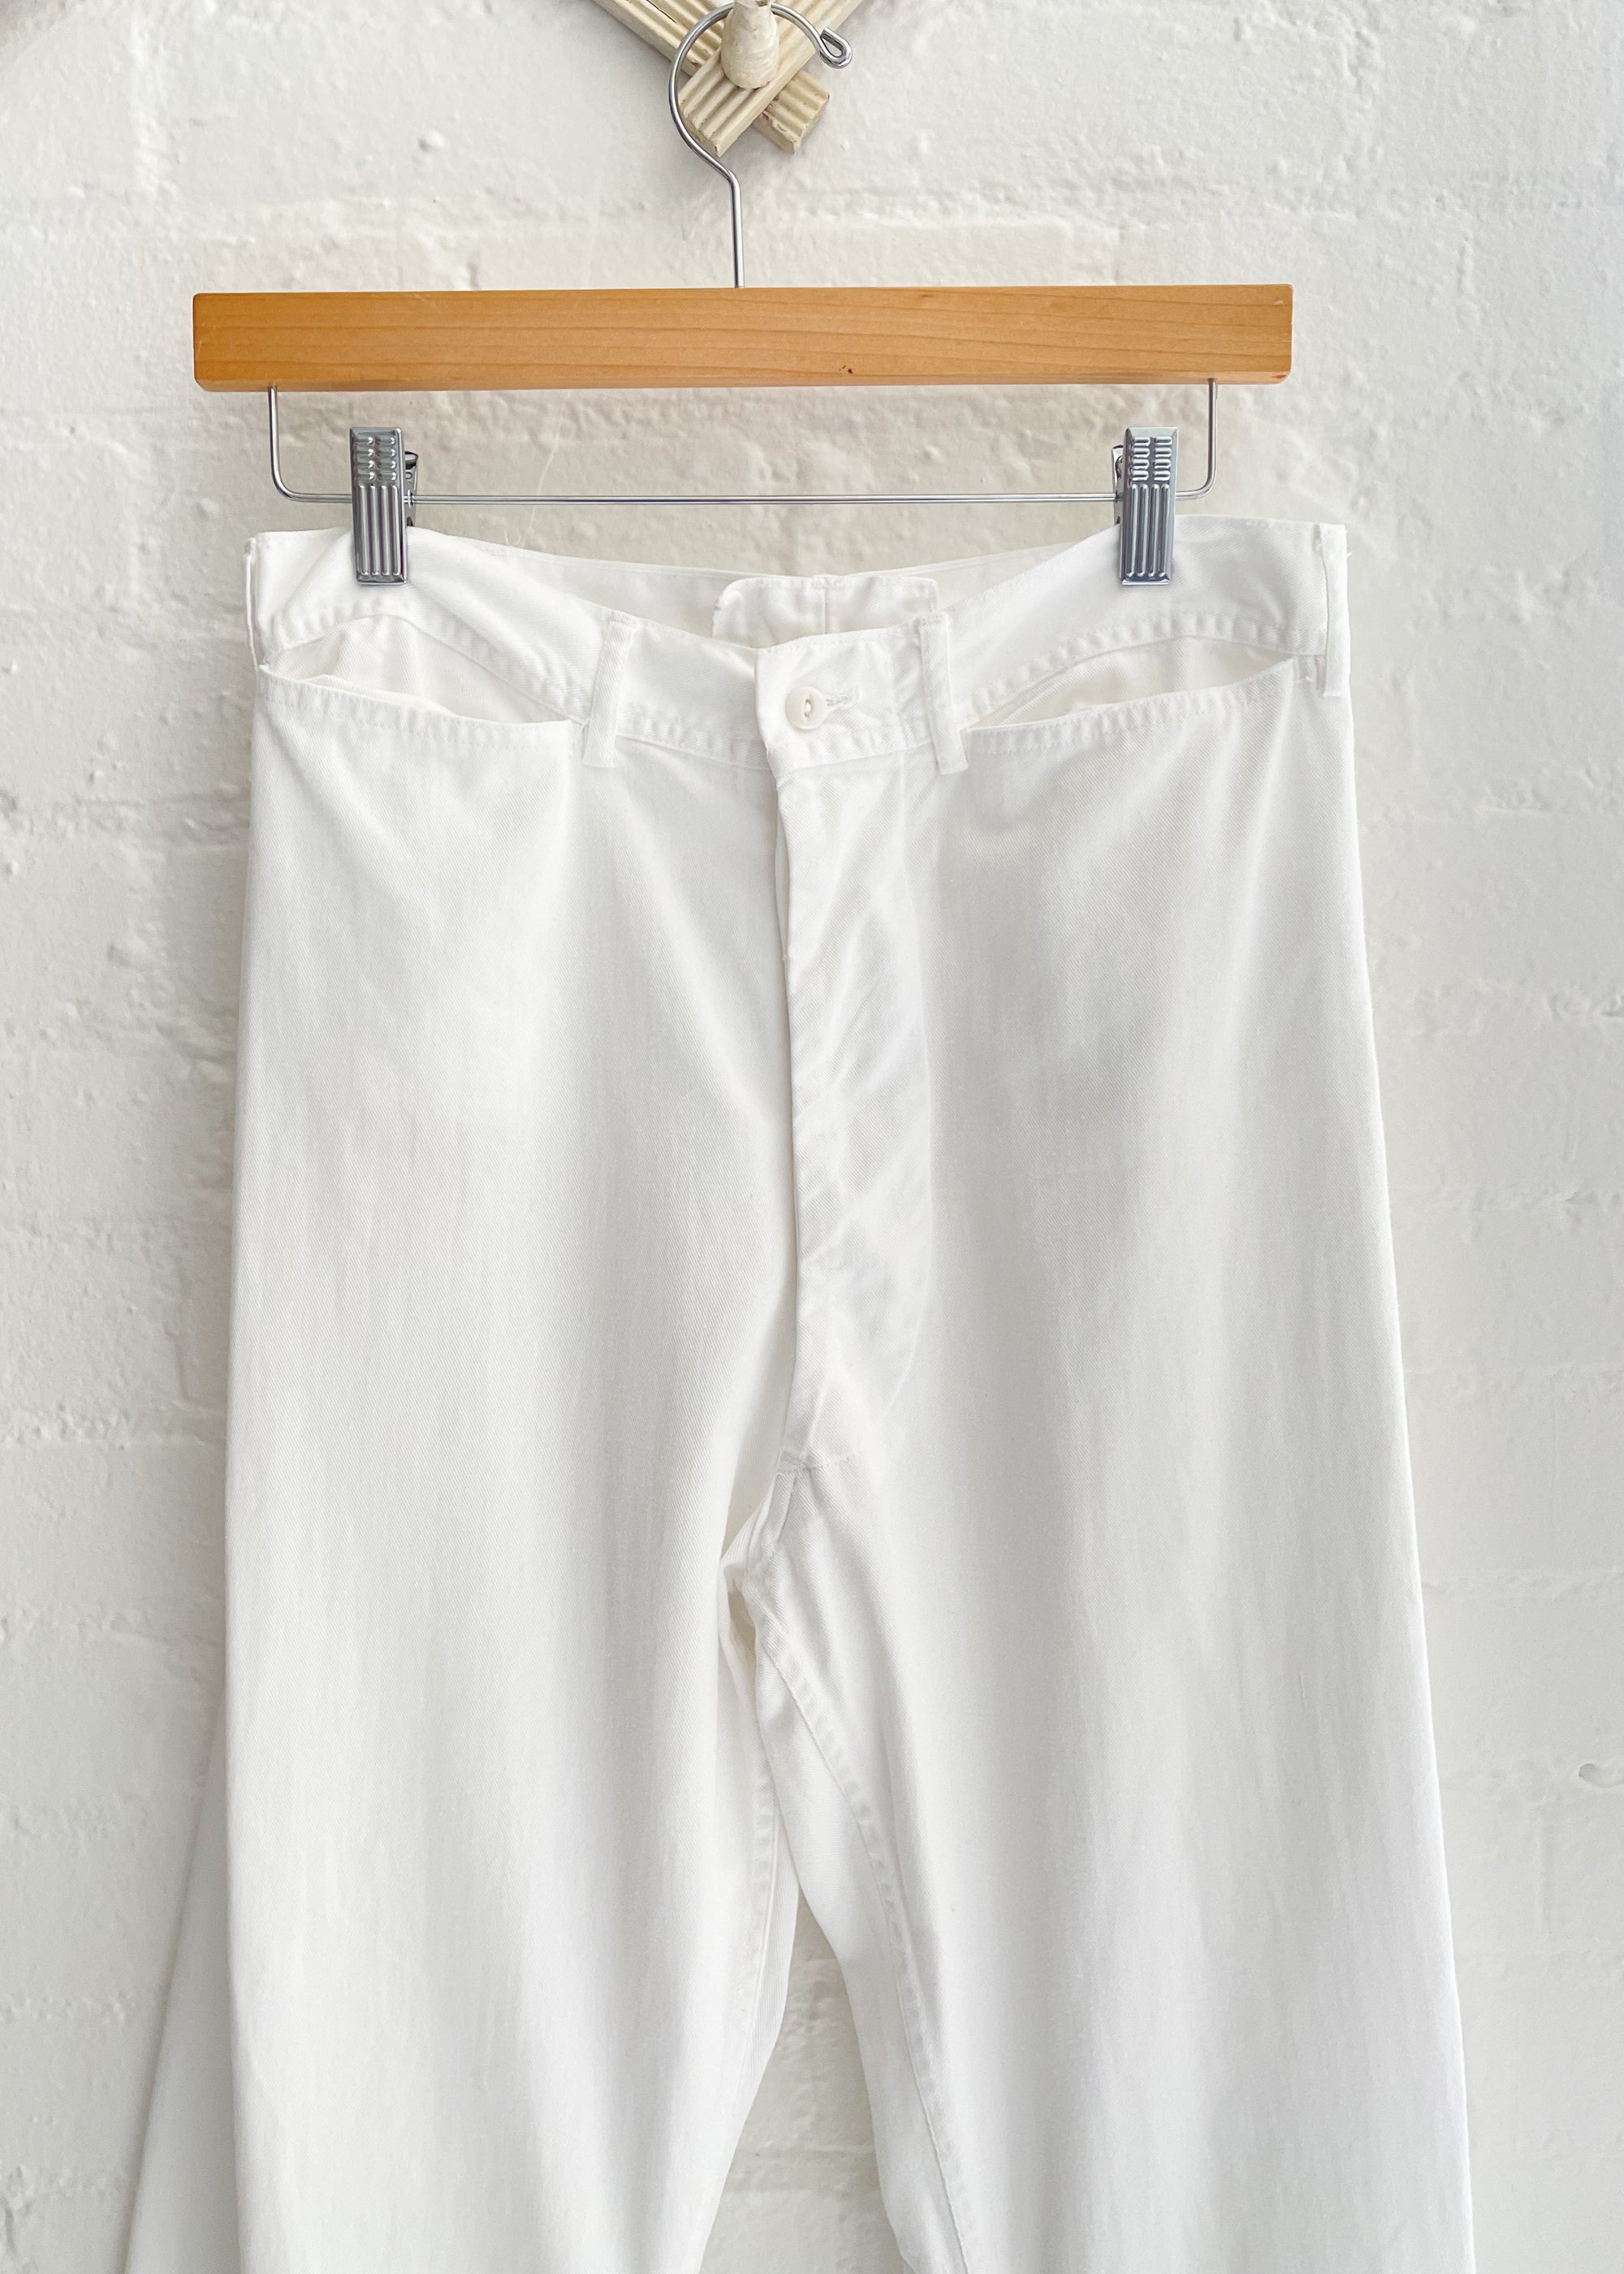 Vintage 1960s White US Navy Sailor Pants - Raleigh Vintage